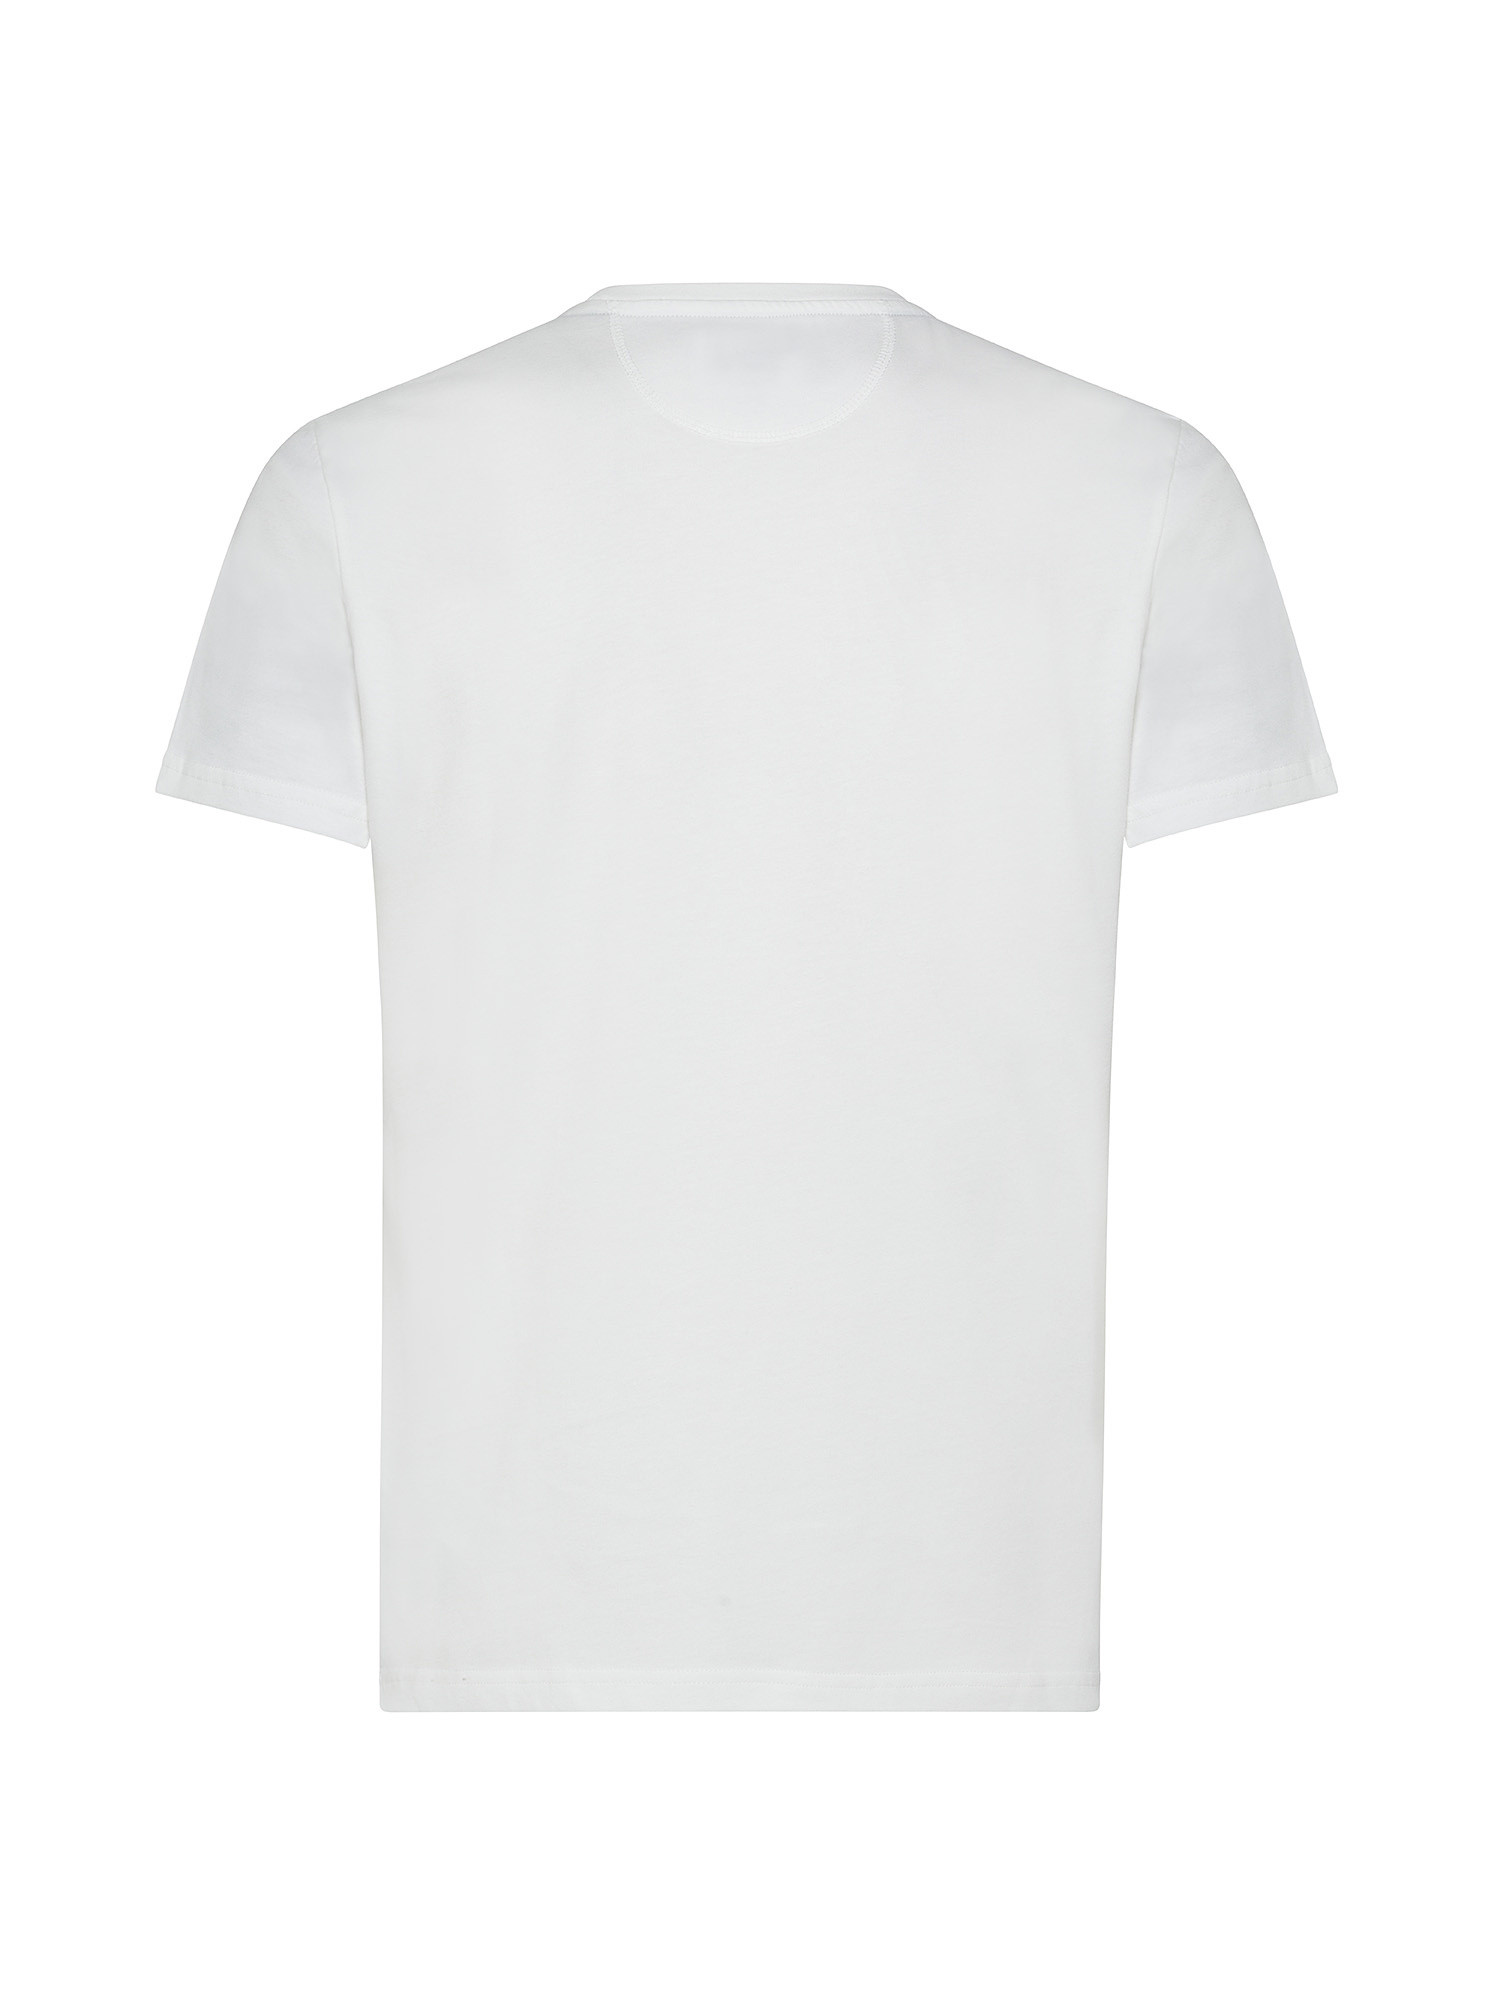 La Martina - T-shirt regular fit in cotone, Bianco, large image number 1